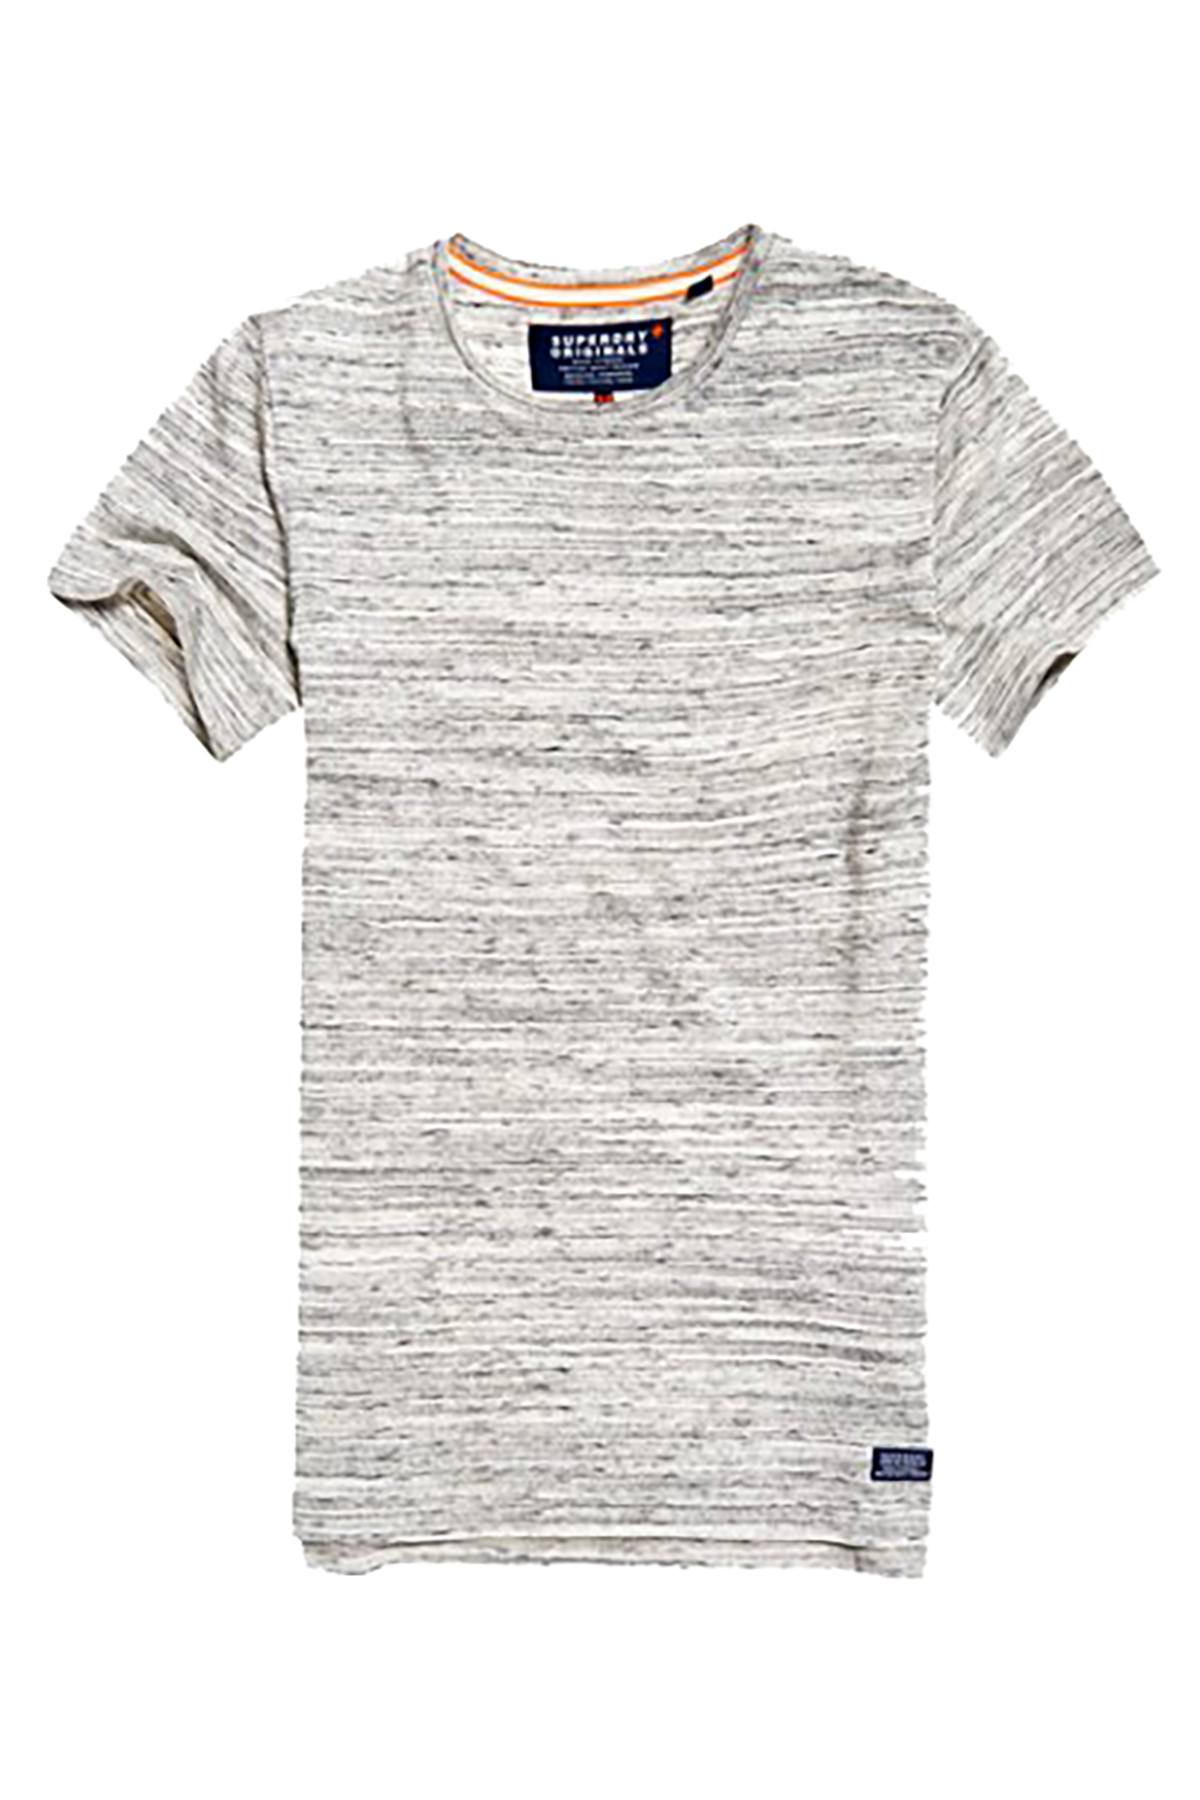 SuperDry Silver-Gravel-Grit Dry Originals Longline T-Shirt